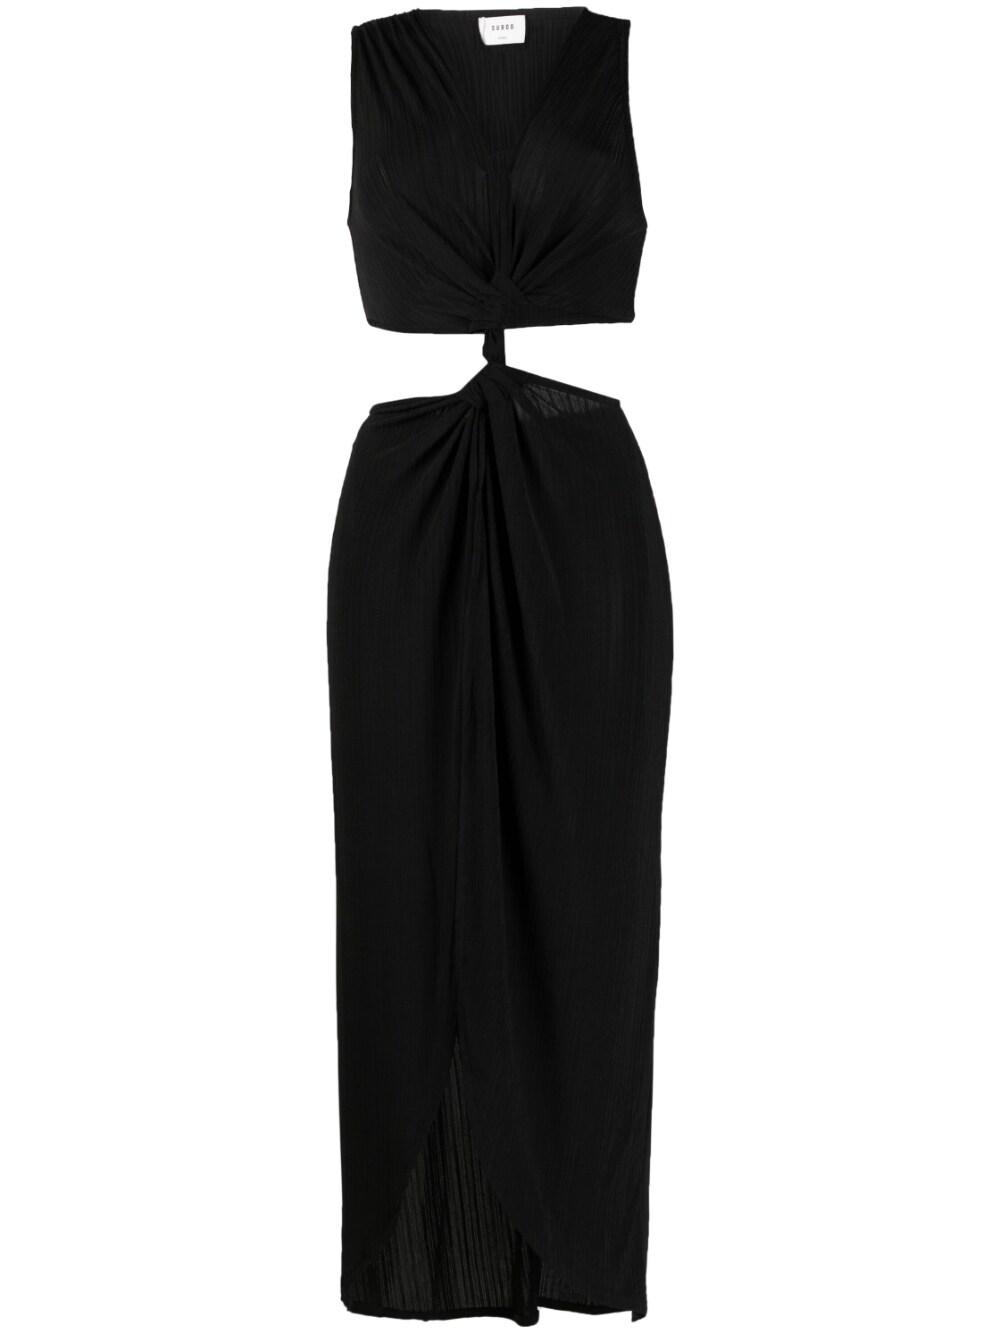 Suboo Asymmetric Midi Dress in Black | Lyst